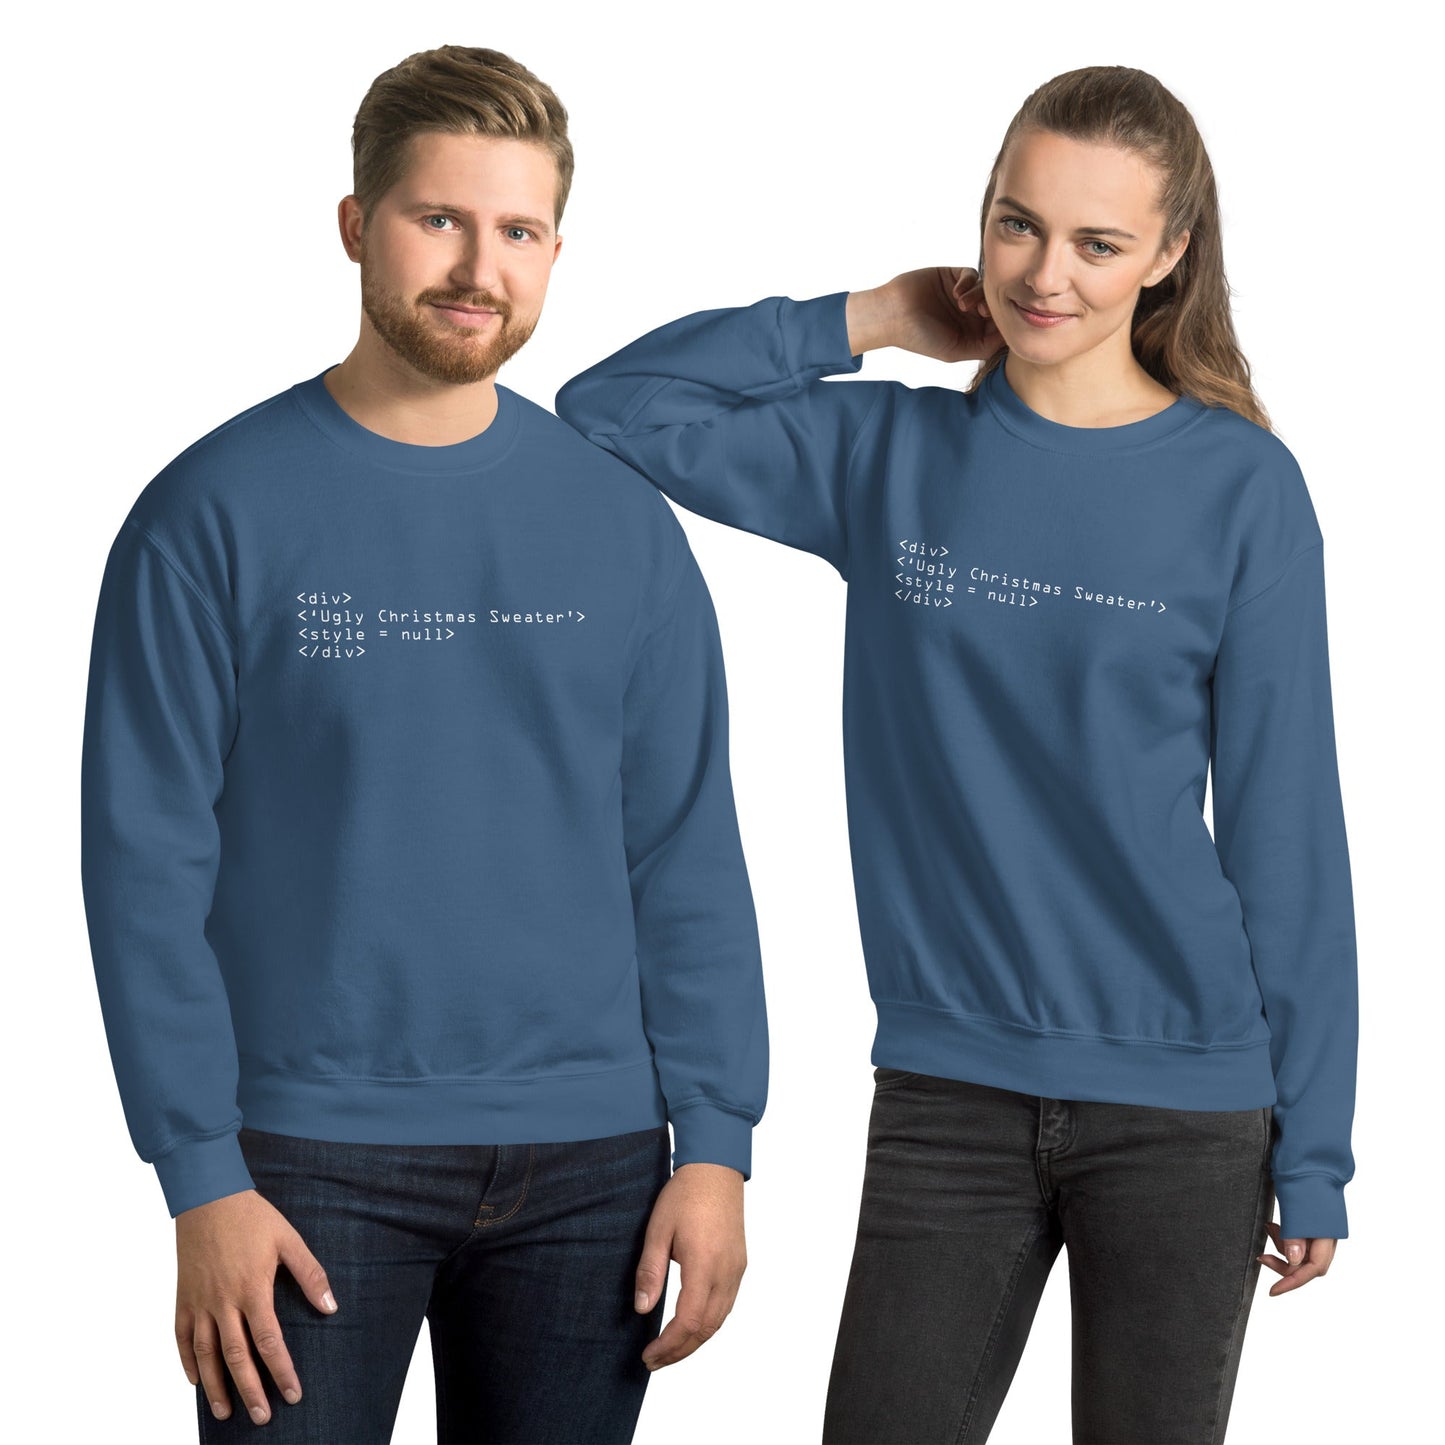 HTML "Ugly Christmas Sweater" sweatshirt - The Nerd Supply Company